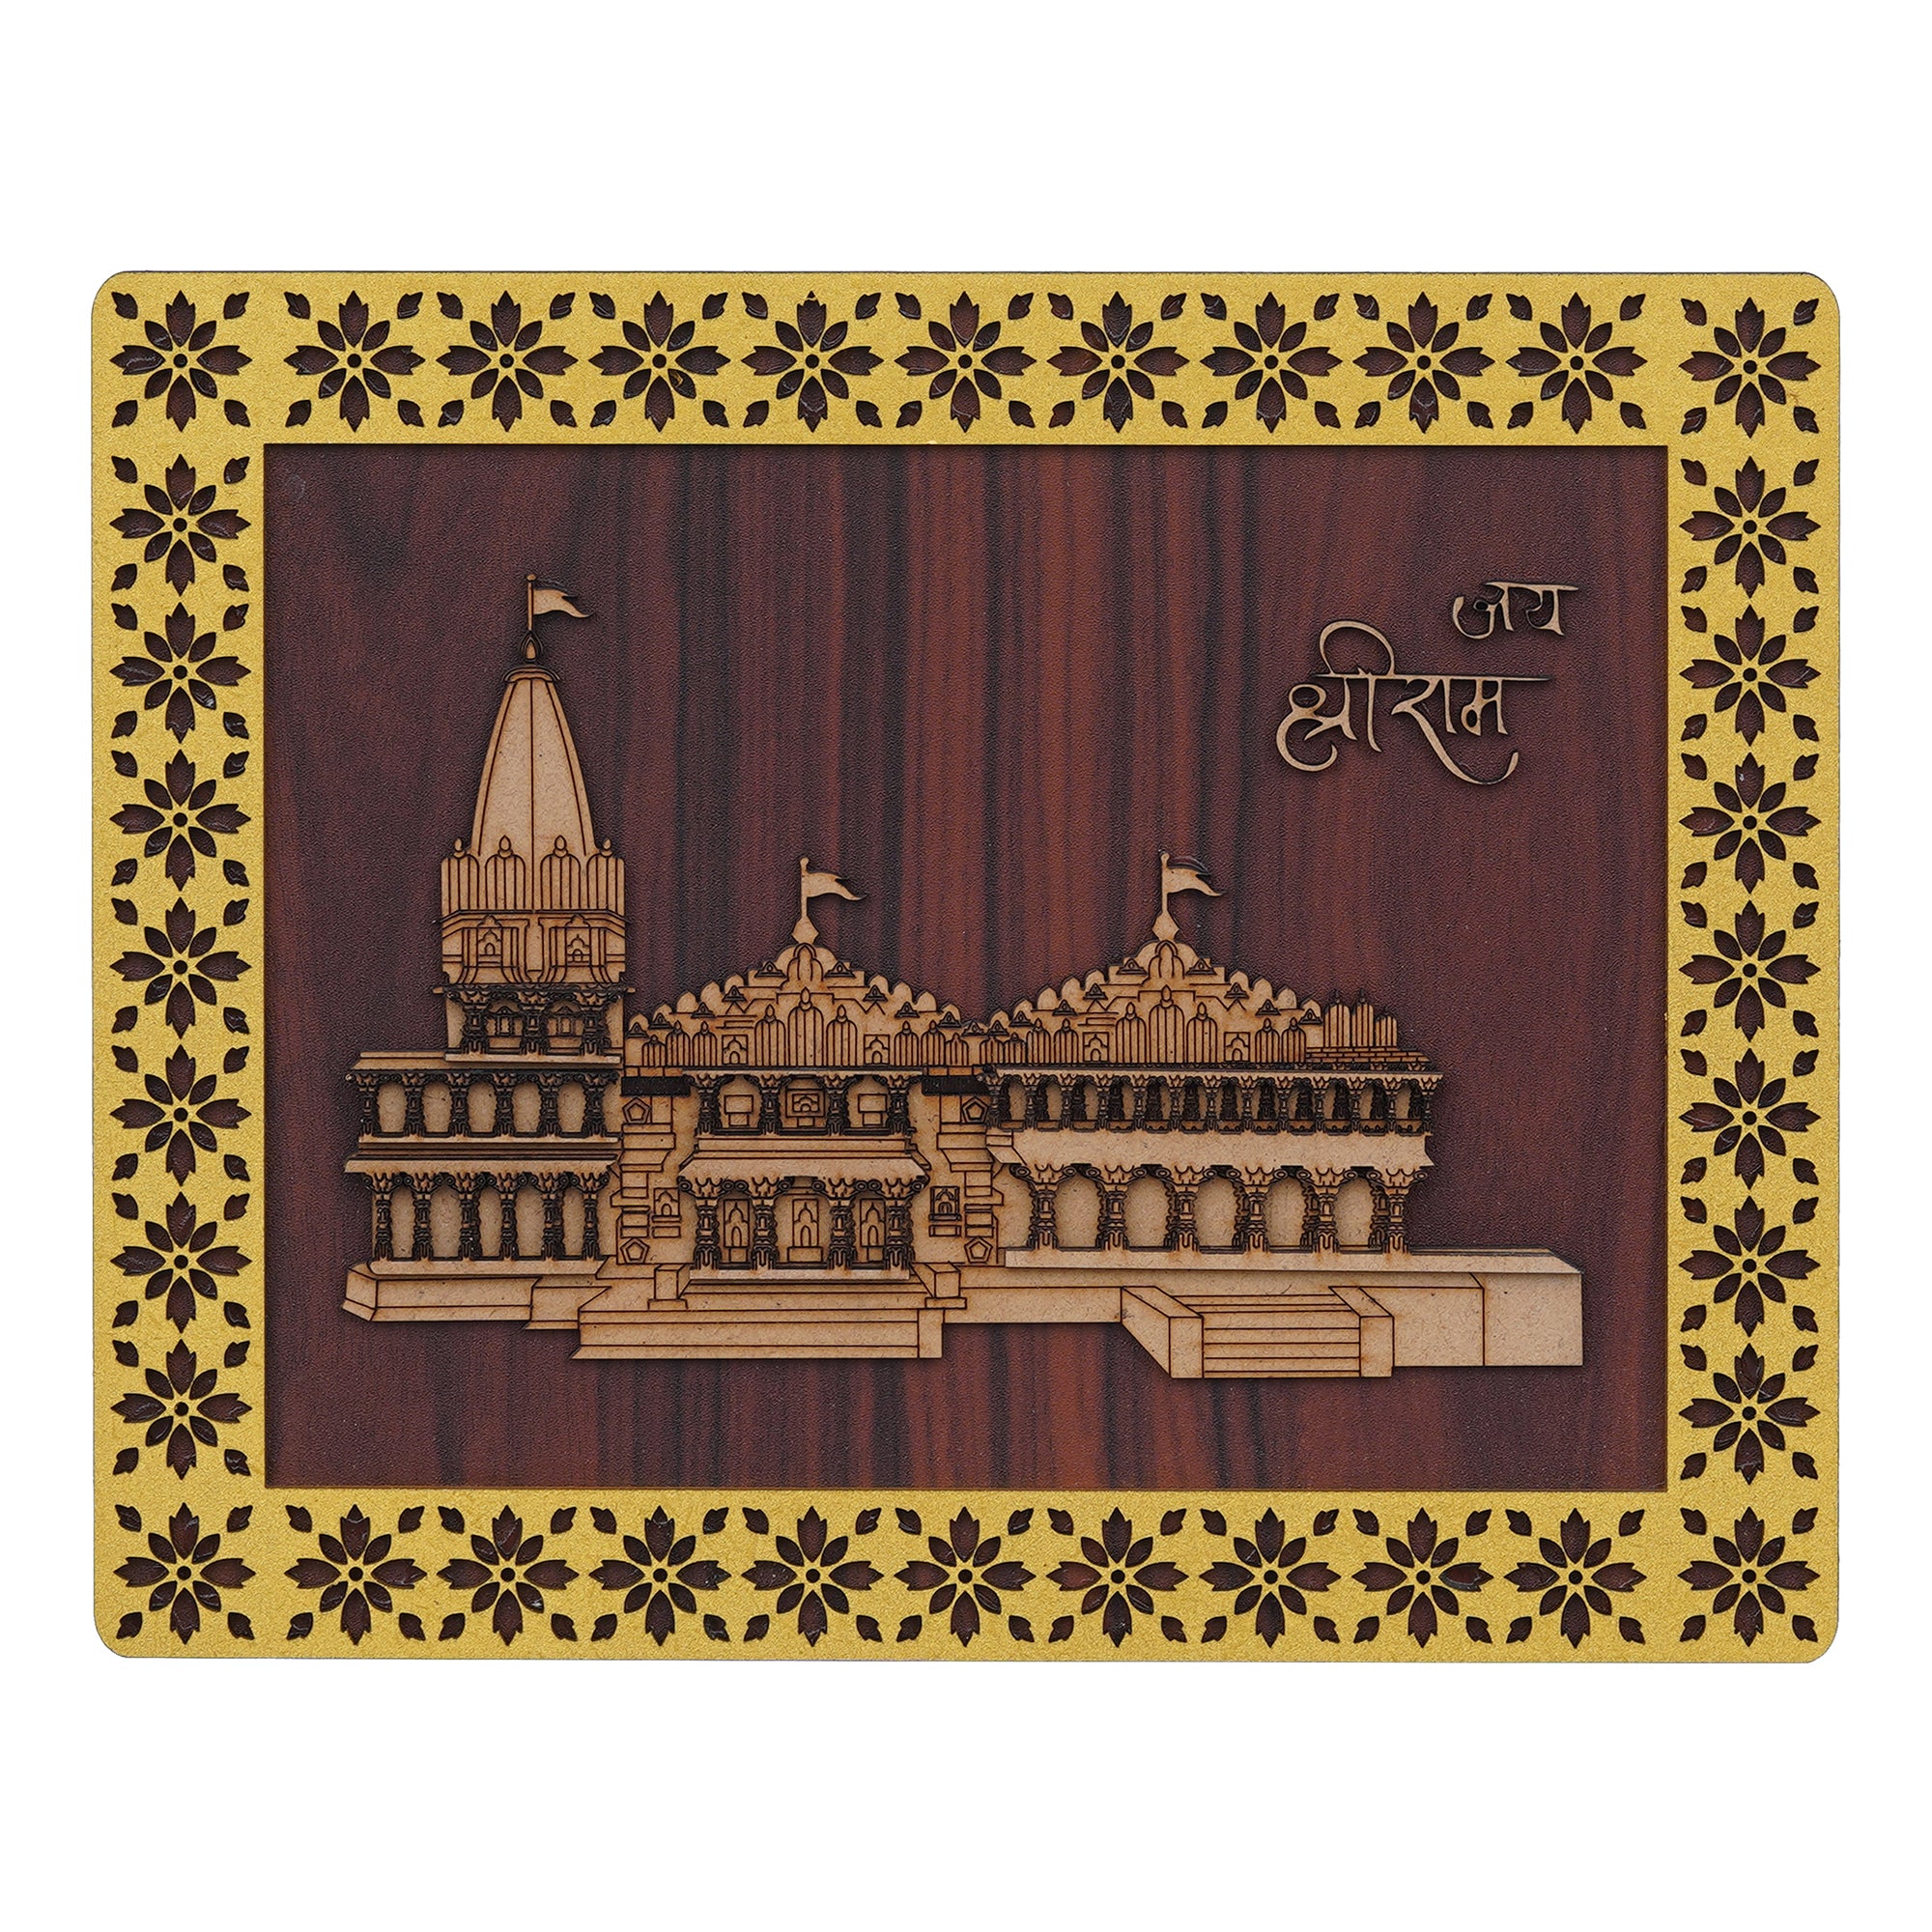 eCraftIndia Jai Shri Ram Mandir Ayodhya Decorative Wooden Frame - Religious Wall Hanging Showpiece for Home Decor, and Spiritual Gifting (Gold, Beige) 2